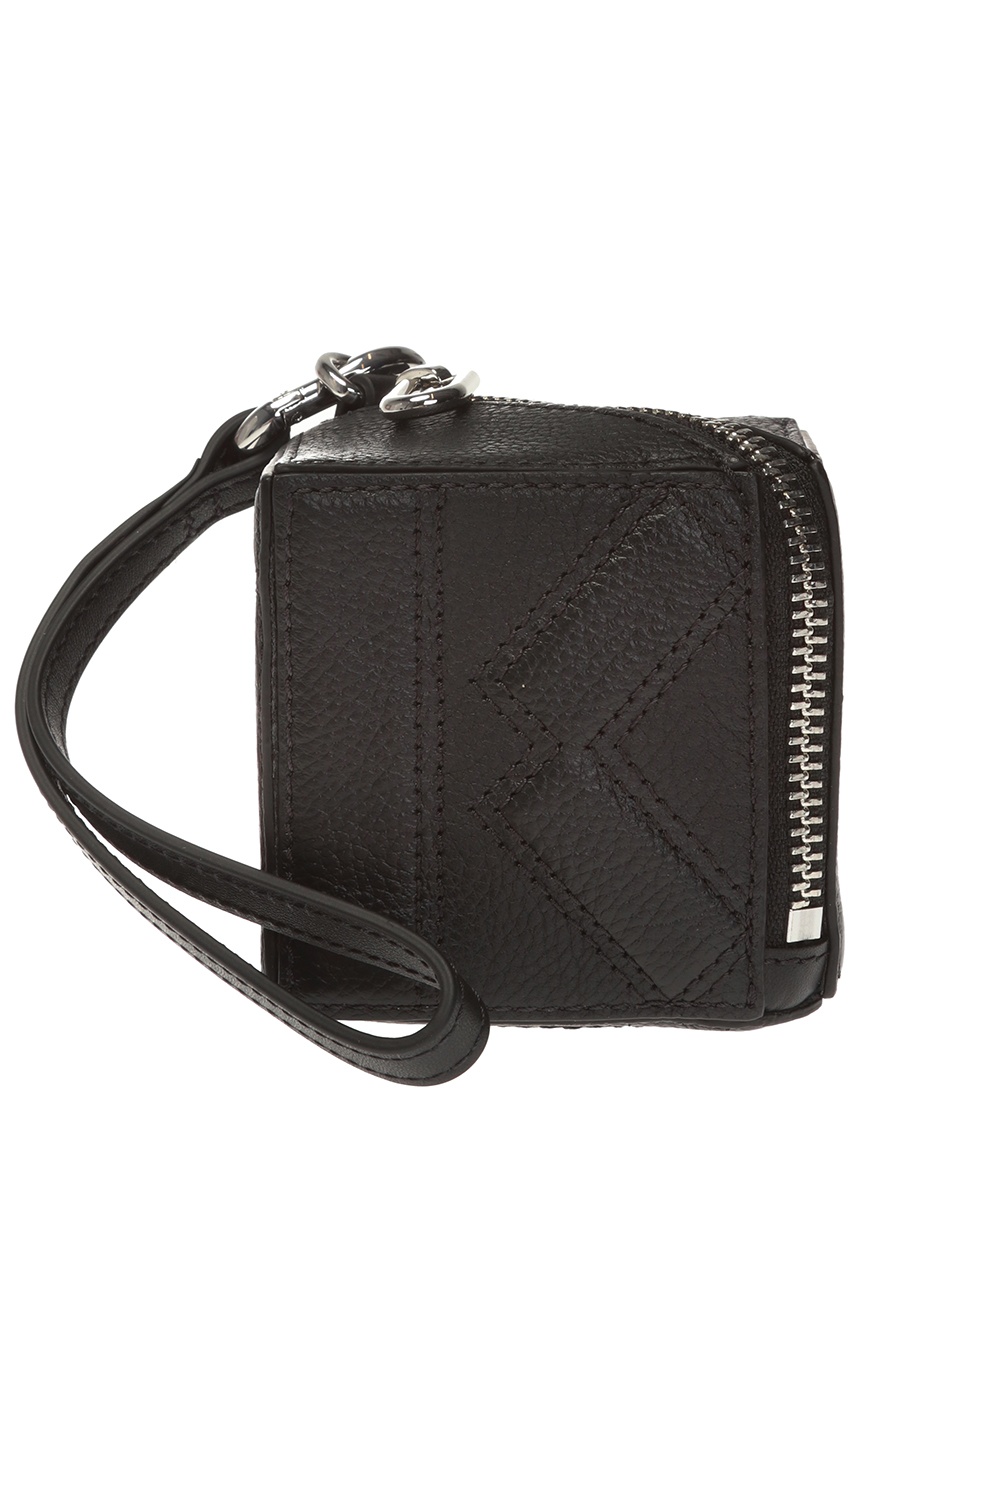 kenzo wallet on chain